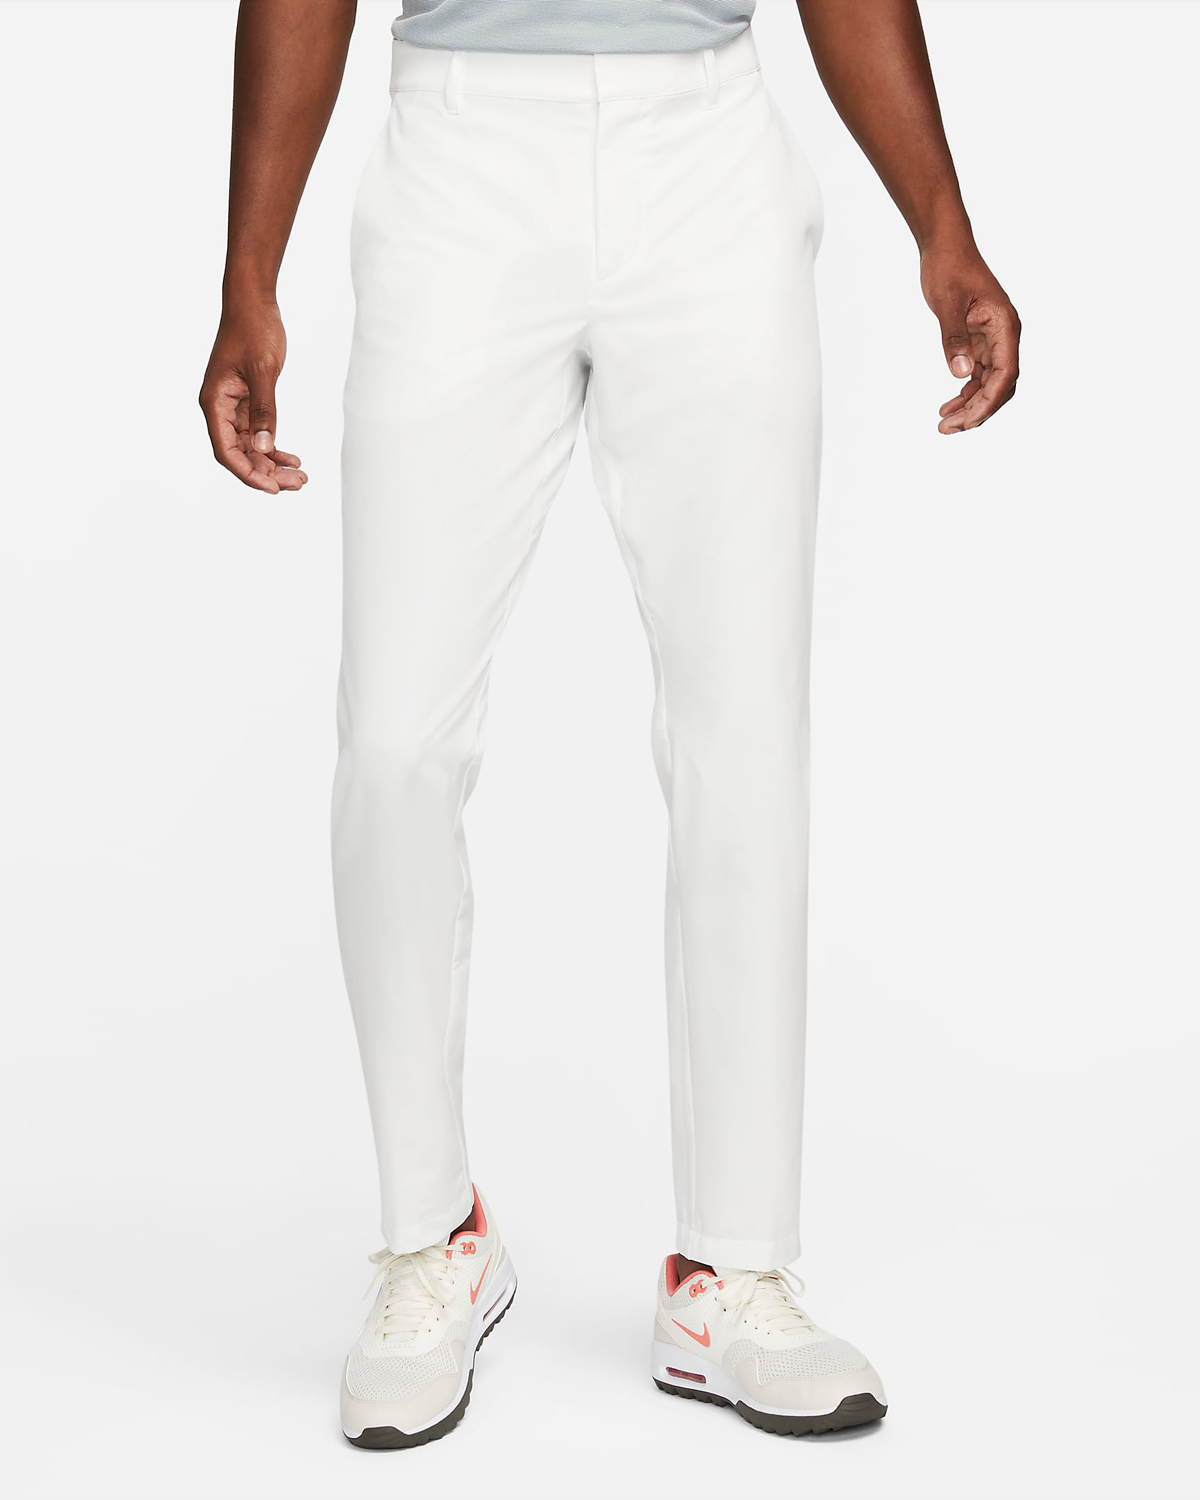 Nike-Vapor-Slim-Fit-Golf-Pants-White-1